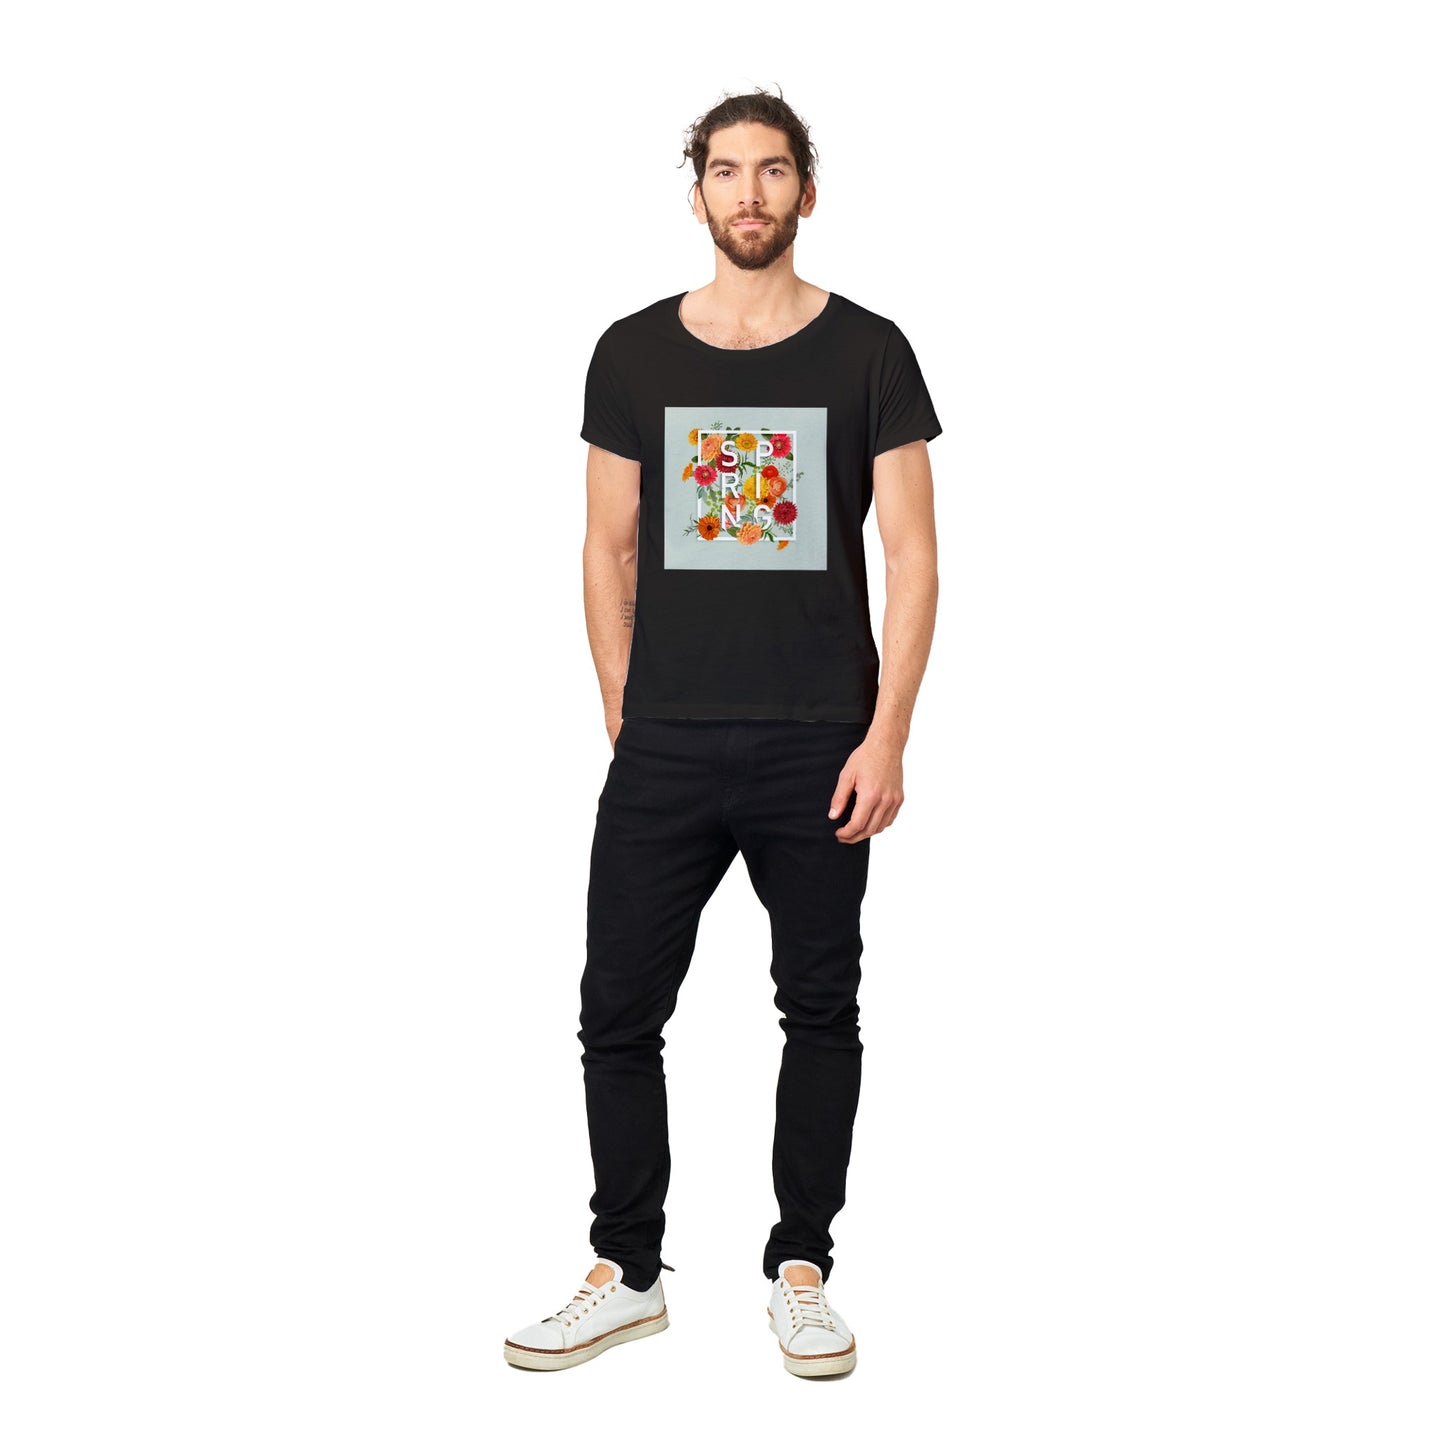 100% Organic Unisex T-shirt/Spring